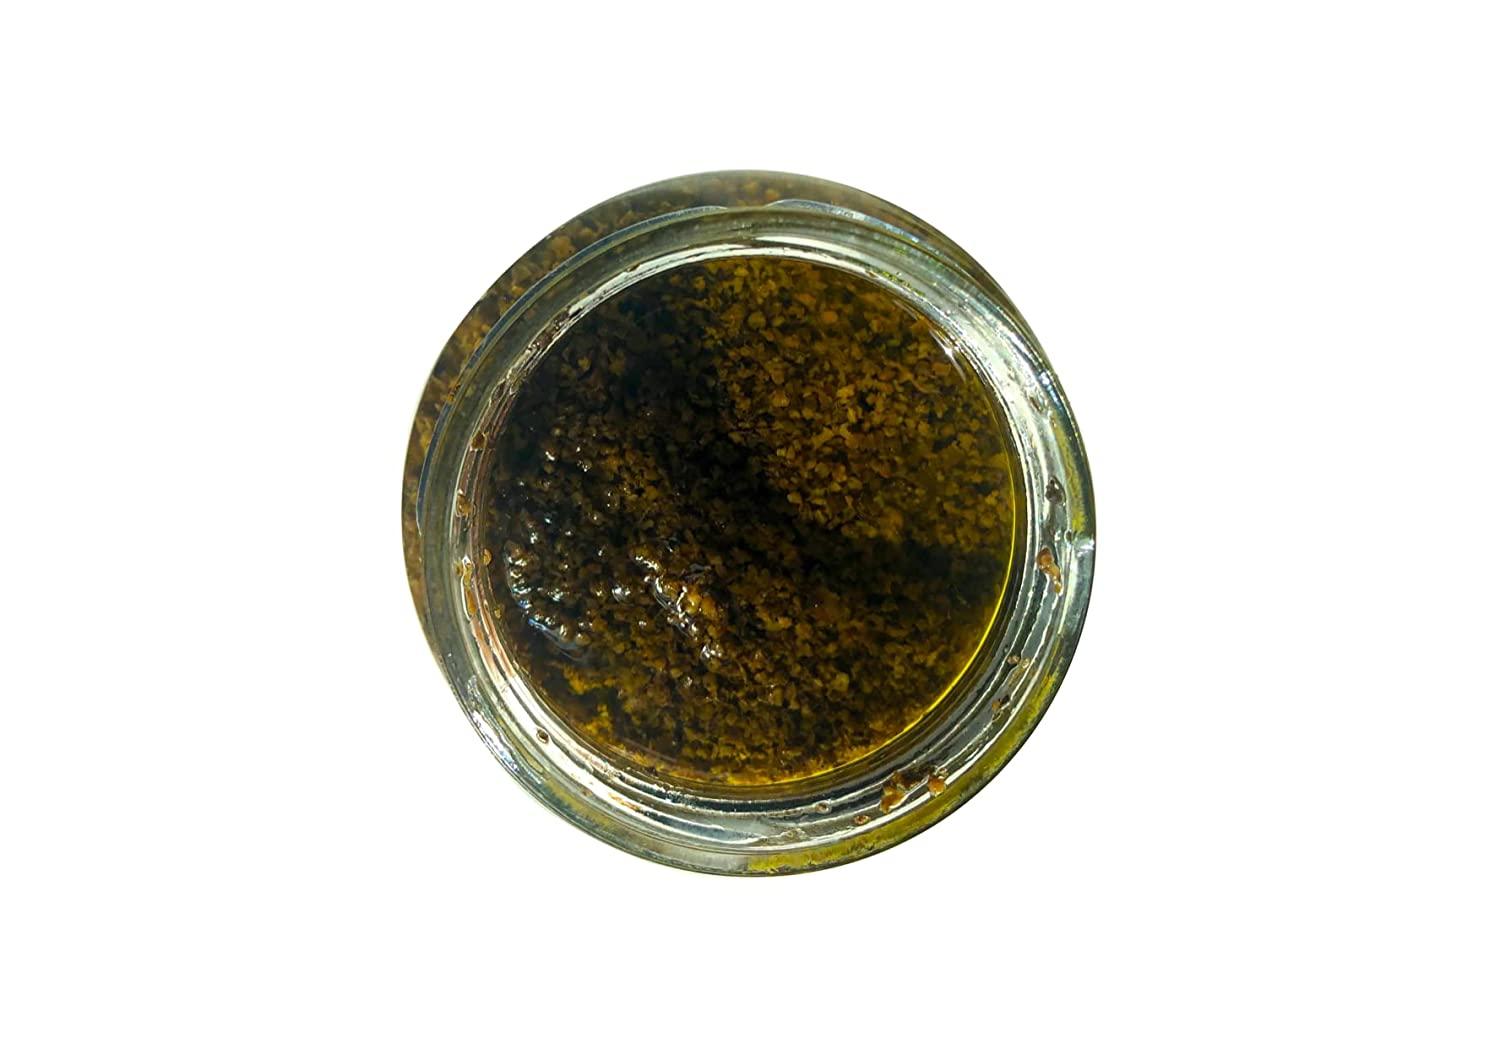 Tartufata Black Truffle Sauce 17.6 oz